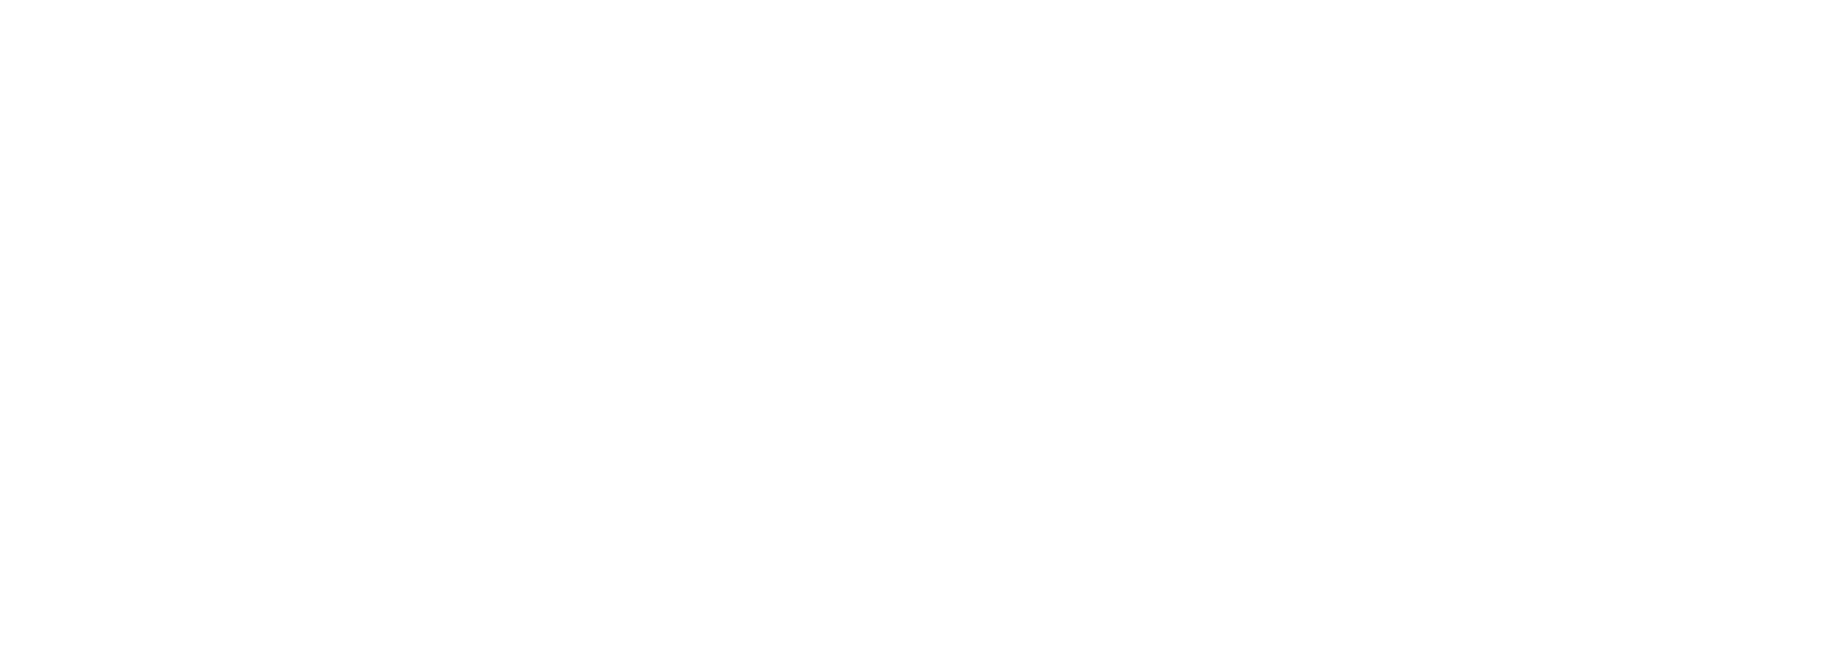 vmw-logo-vmware-logo-white-300